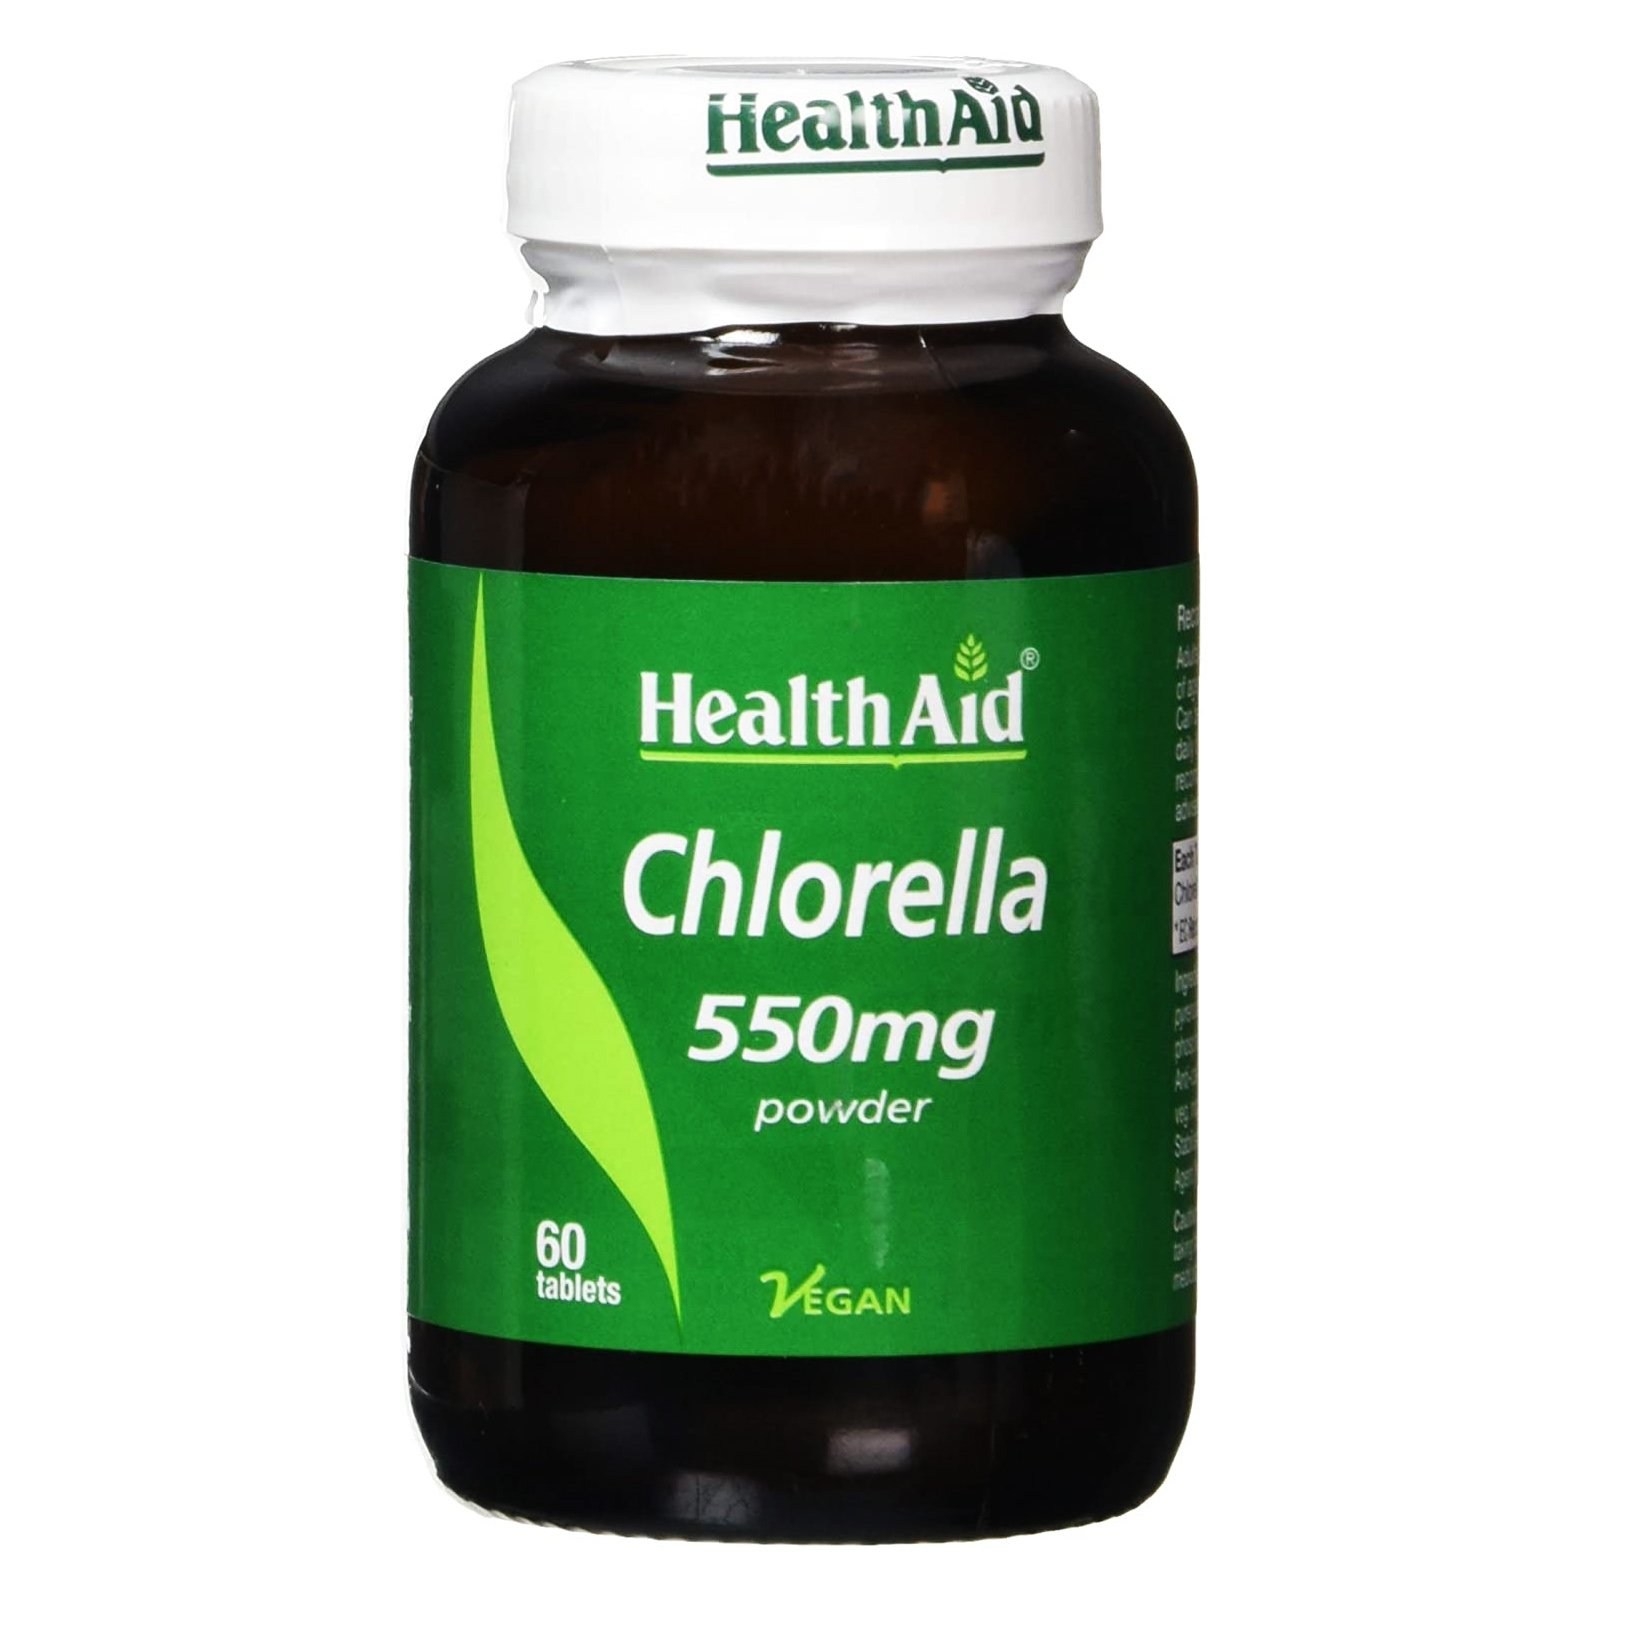 Health Aid Chlorella 550mg Πλούσιο σε Αμινοξέα Βιταμίνες και Μέταλλα Κυρίως Ασβέστιο, Φώσφορο και Σίδηρο 60tabs